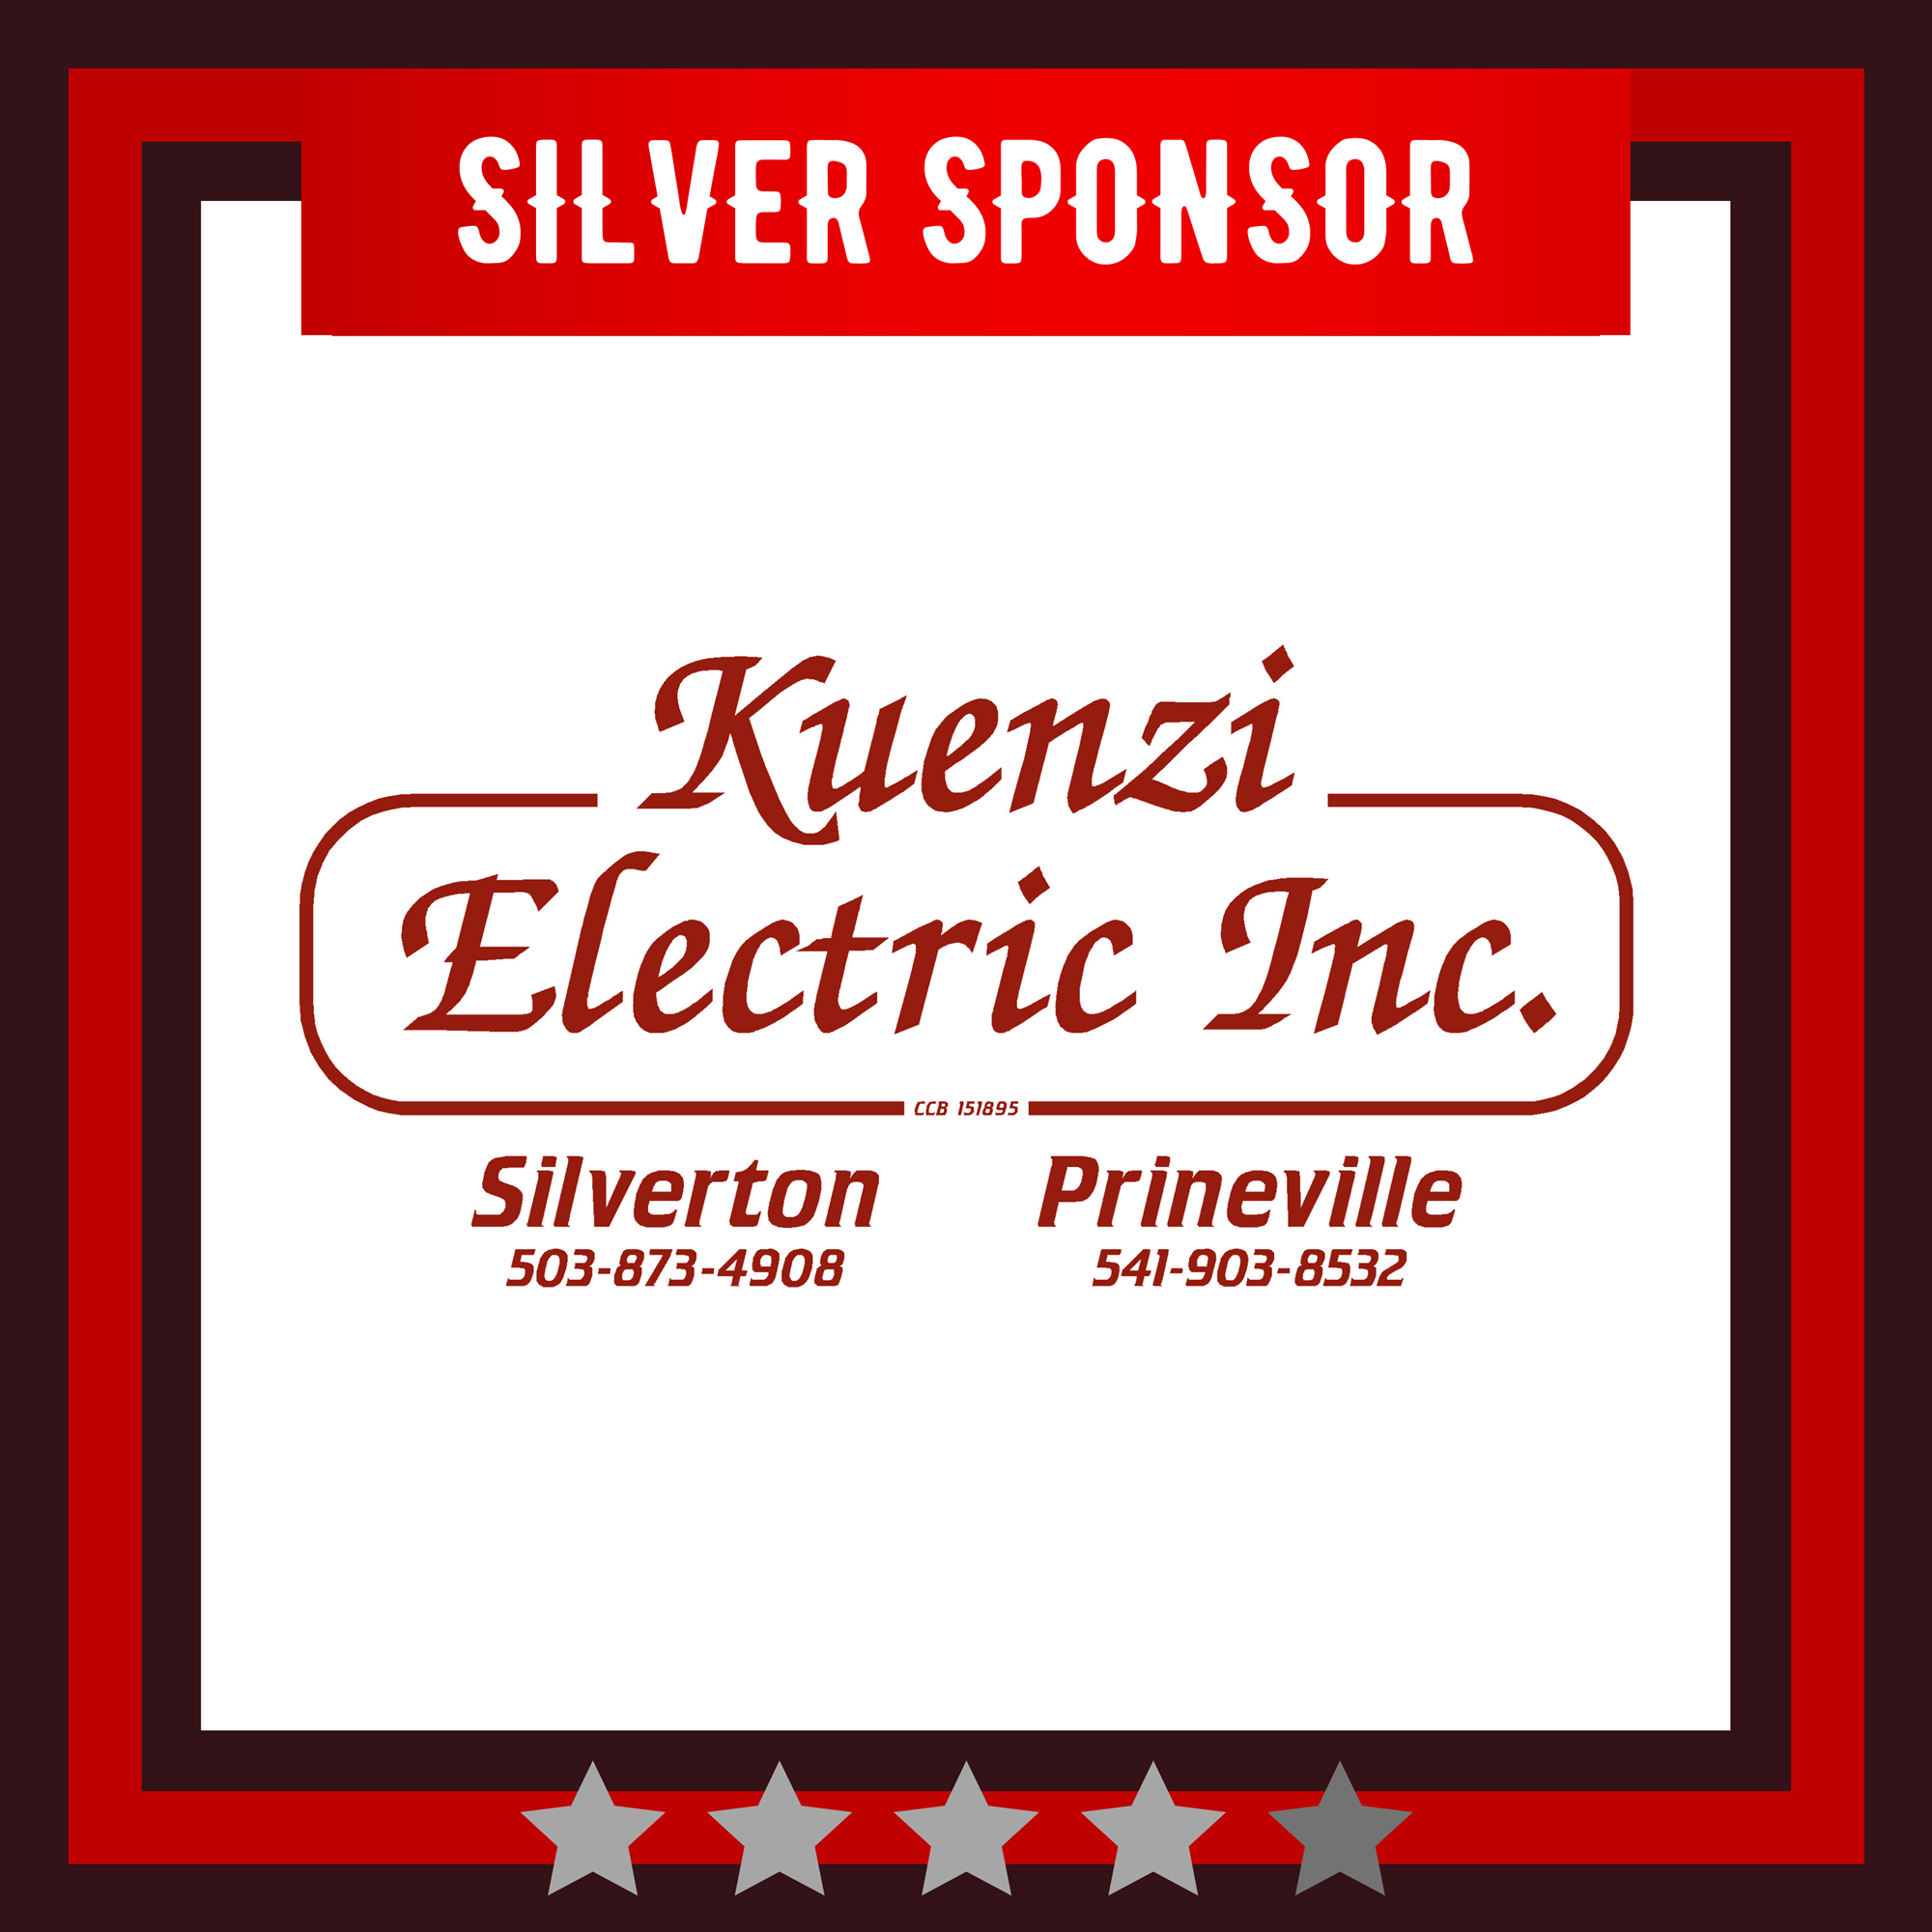 Silver Sponsor: Kuenzi Electric, Inc.